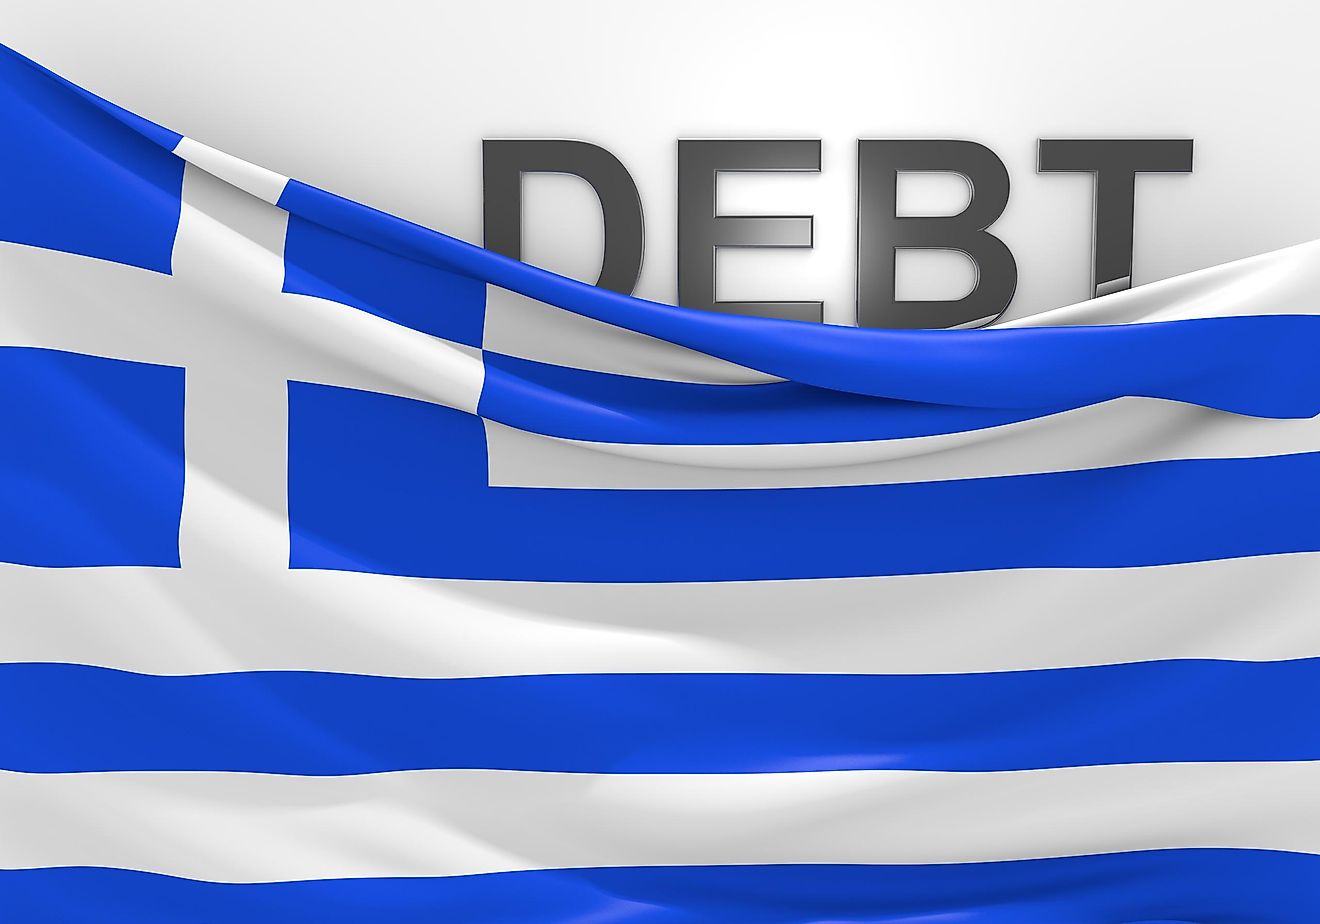 The Greek flag. Image credit: Greekboston.com